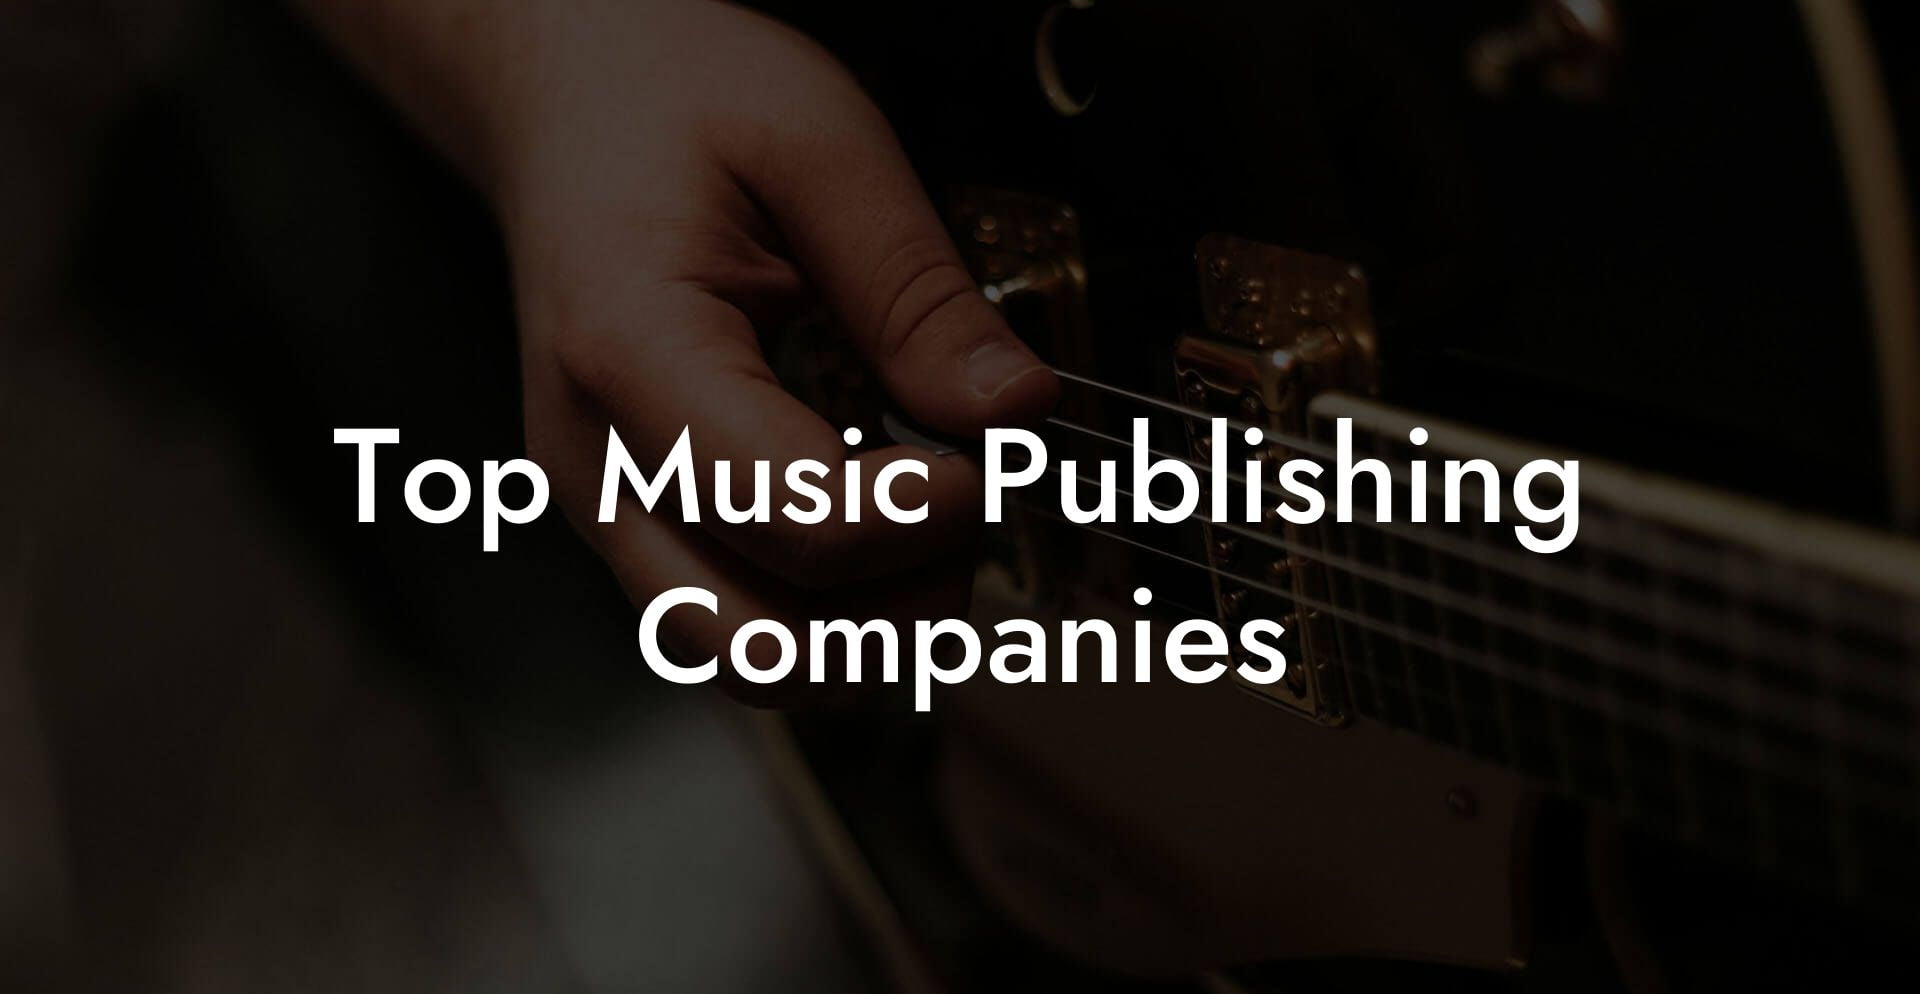 Top Music Publishing Companies